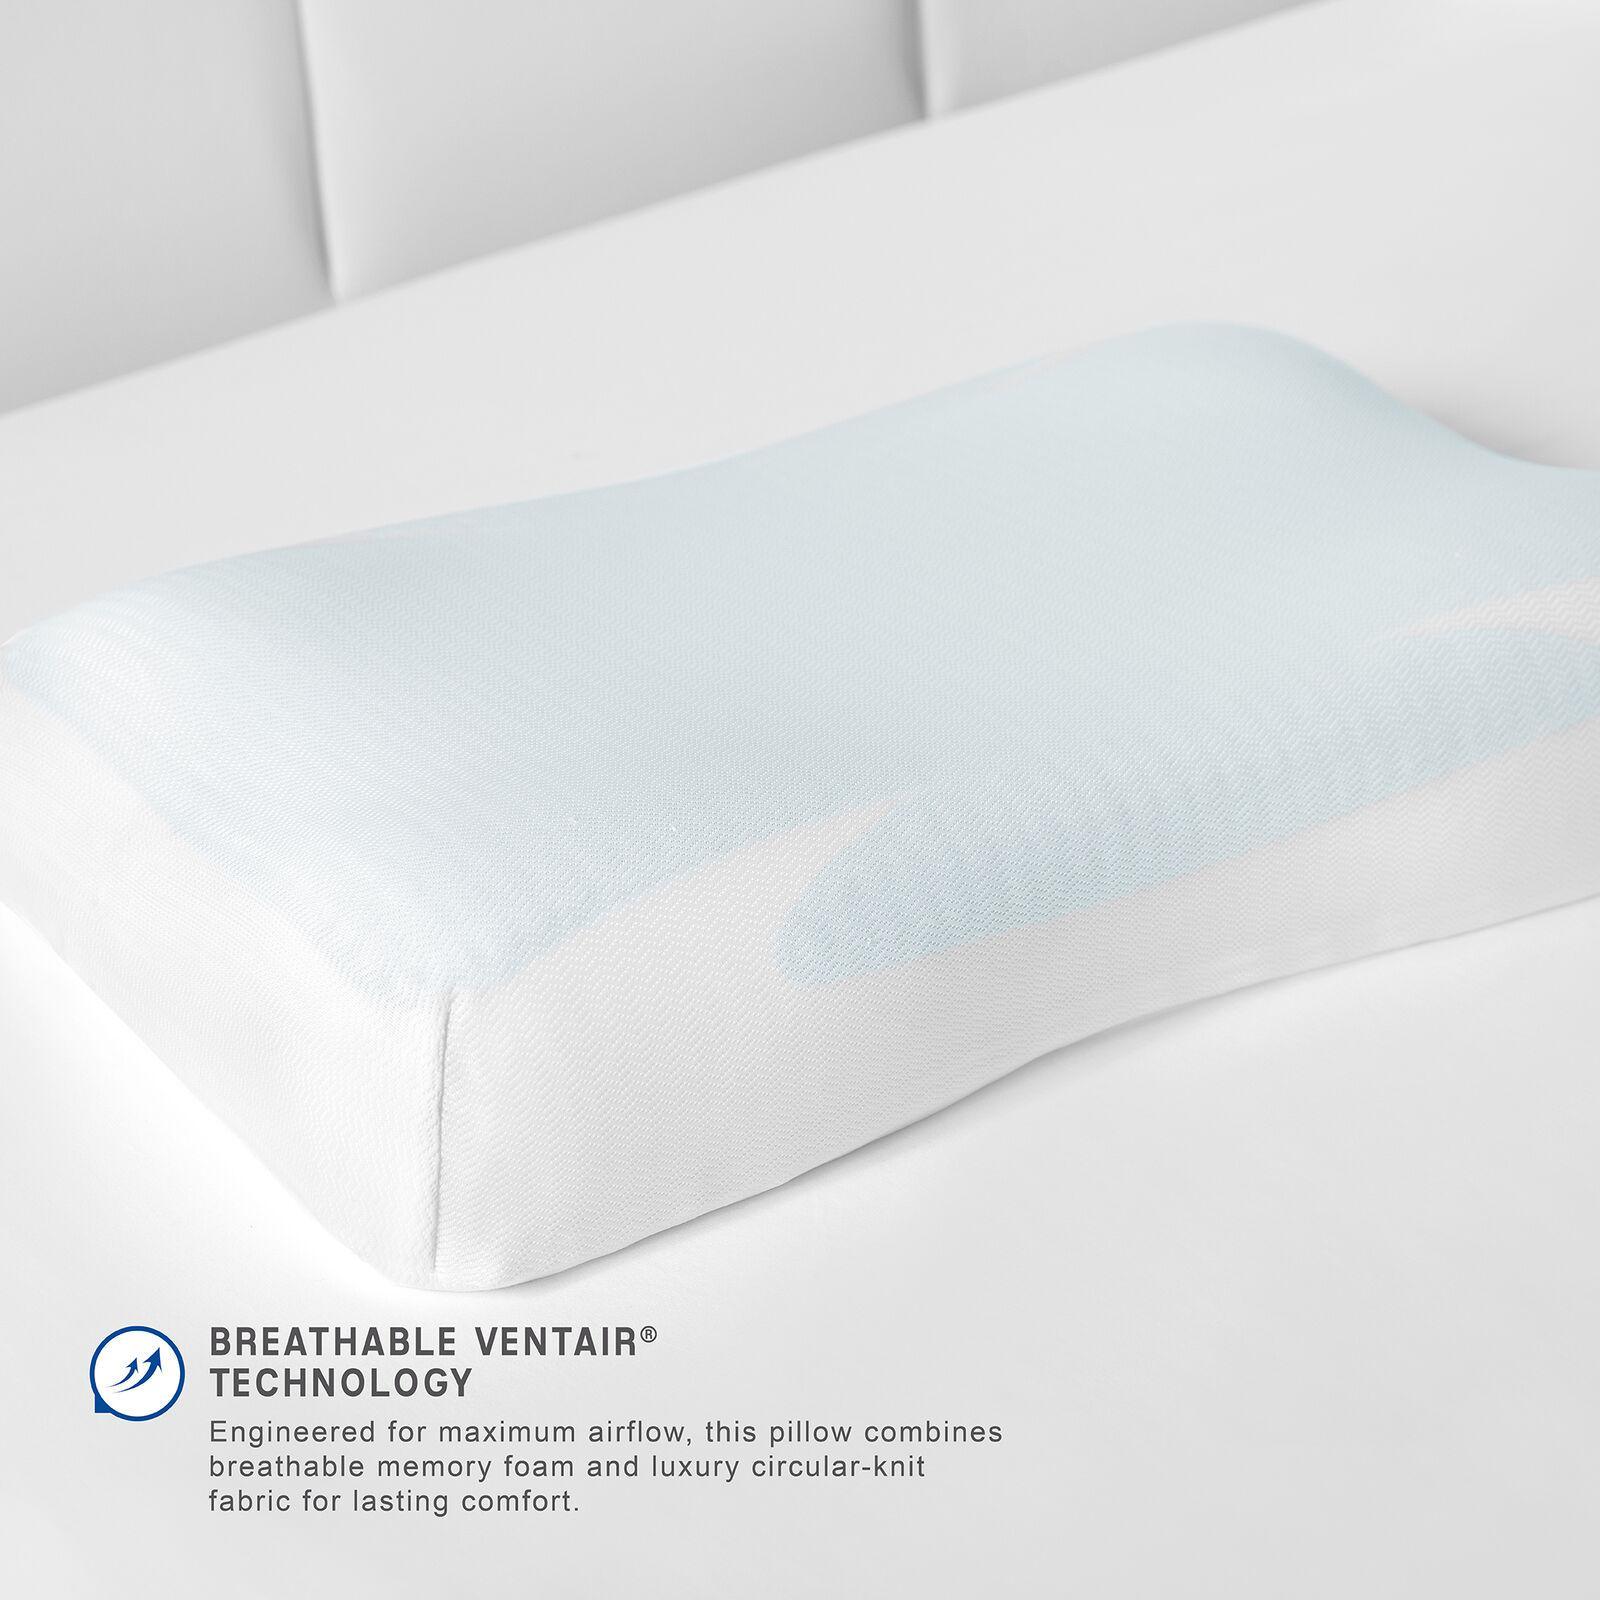 SensorPEDIC GelMAX Luxury Cooling Memory Foam Bed Pillow - Etyn Online {{ product_tag }}